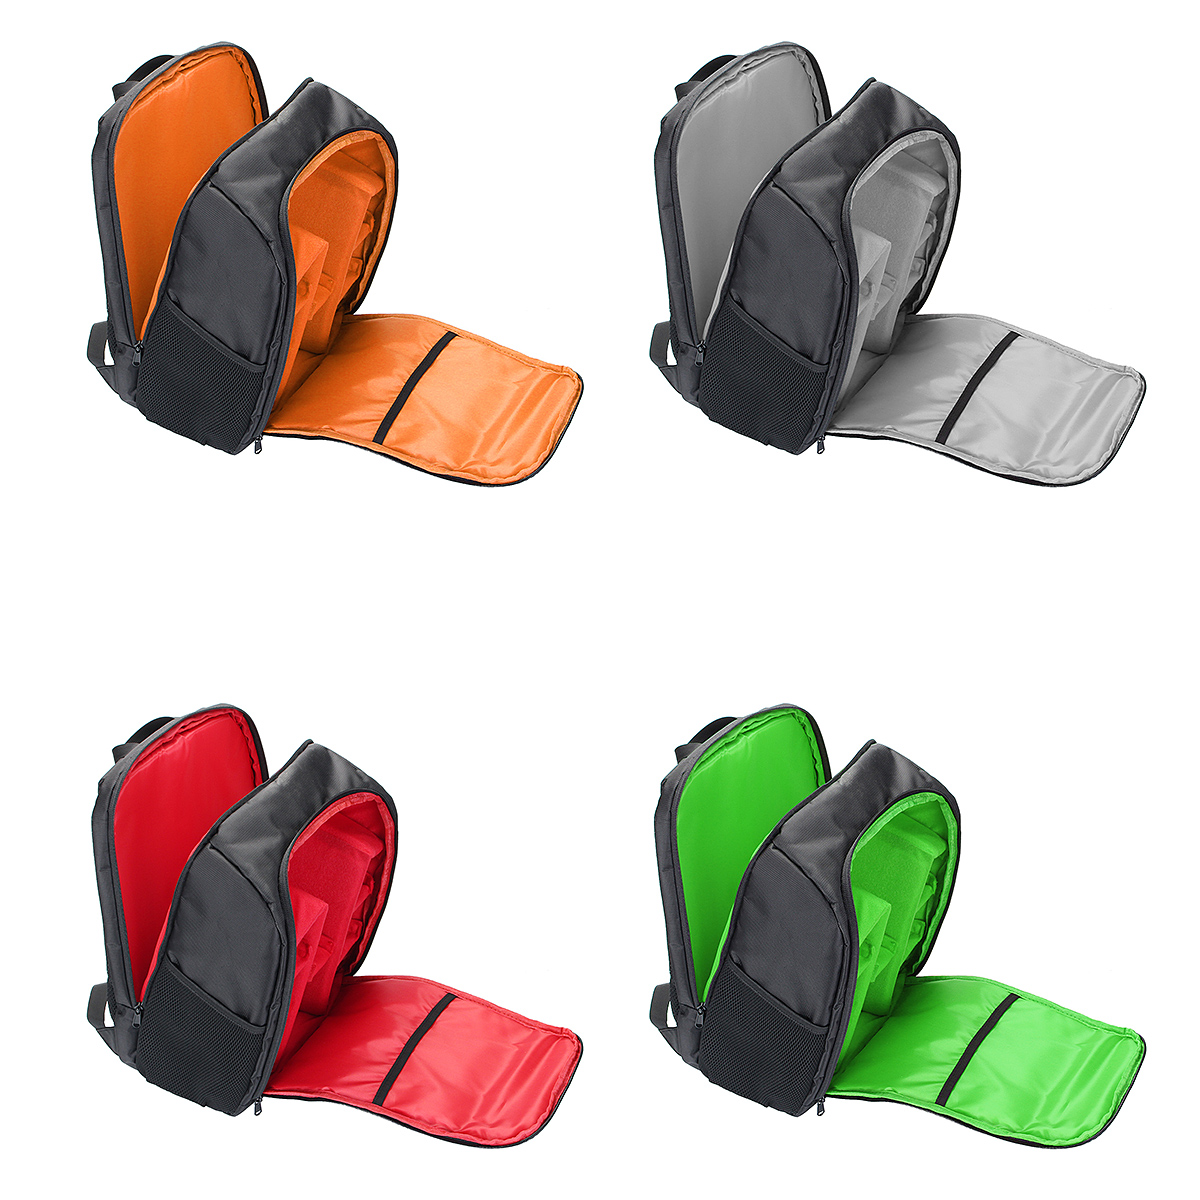 Find Waterproof Backpack Shoulder Bag Laptop Case For DSLR Camera Lens Accessories for Sale on Gipsybee.com with cryptocurrencies